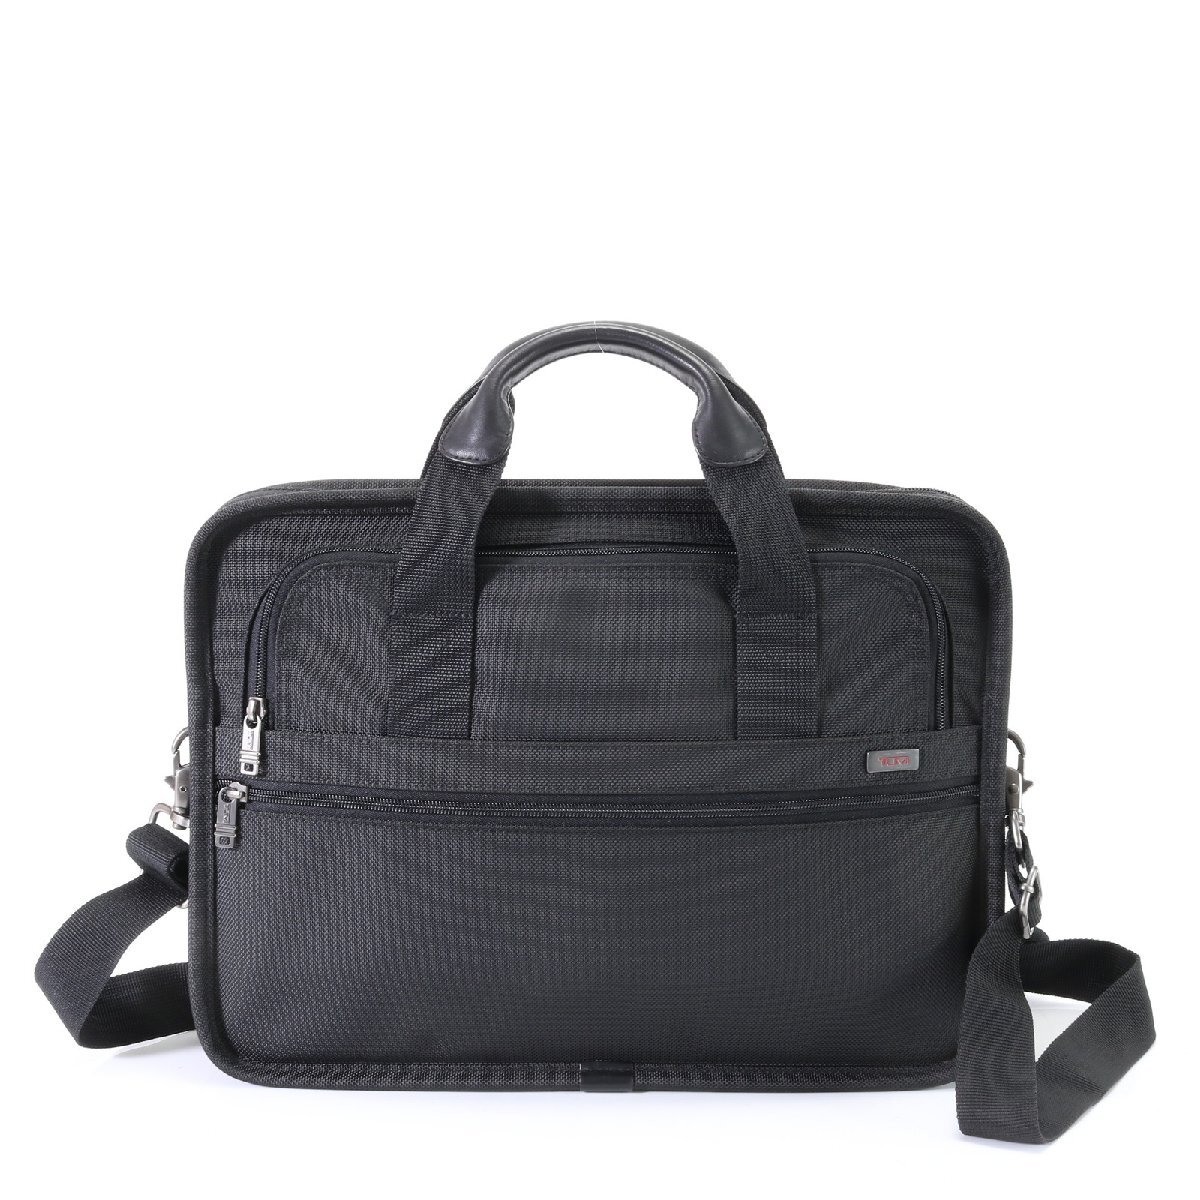 1 jpy # ultimate beautiful goods #TUMI Tumi # leather nylon 2WAY business bag diagonal .. document bag commuting shoulder PC black A4 men's EEM S1-6